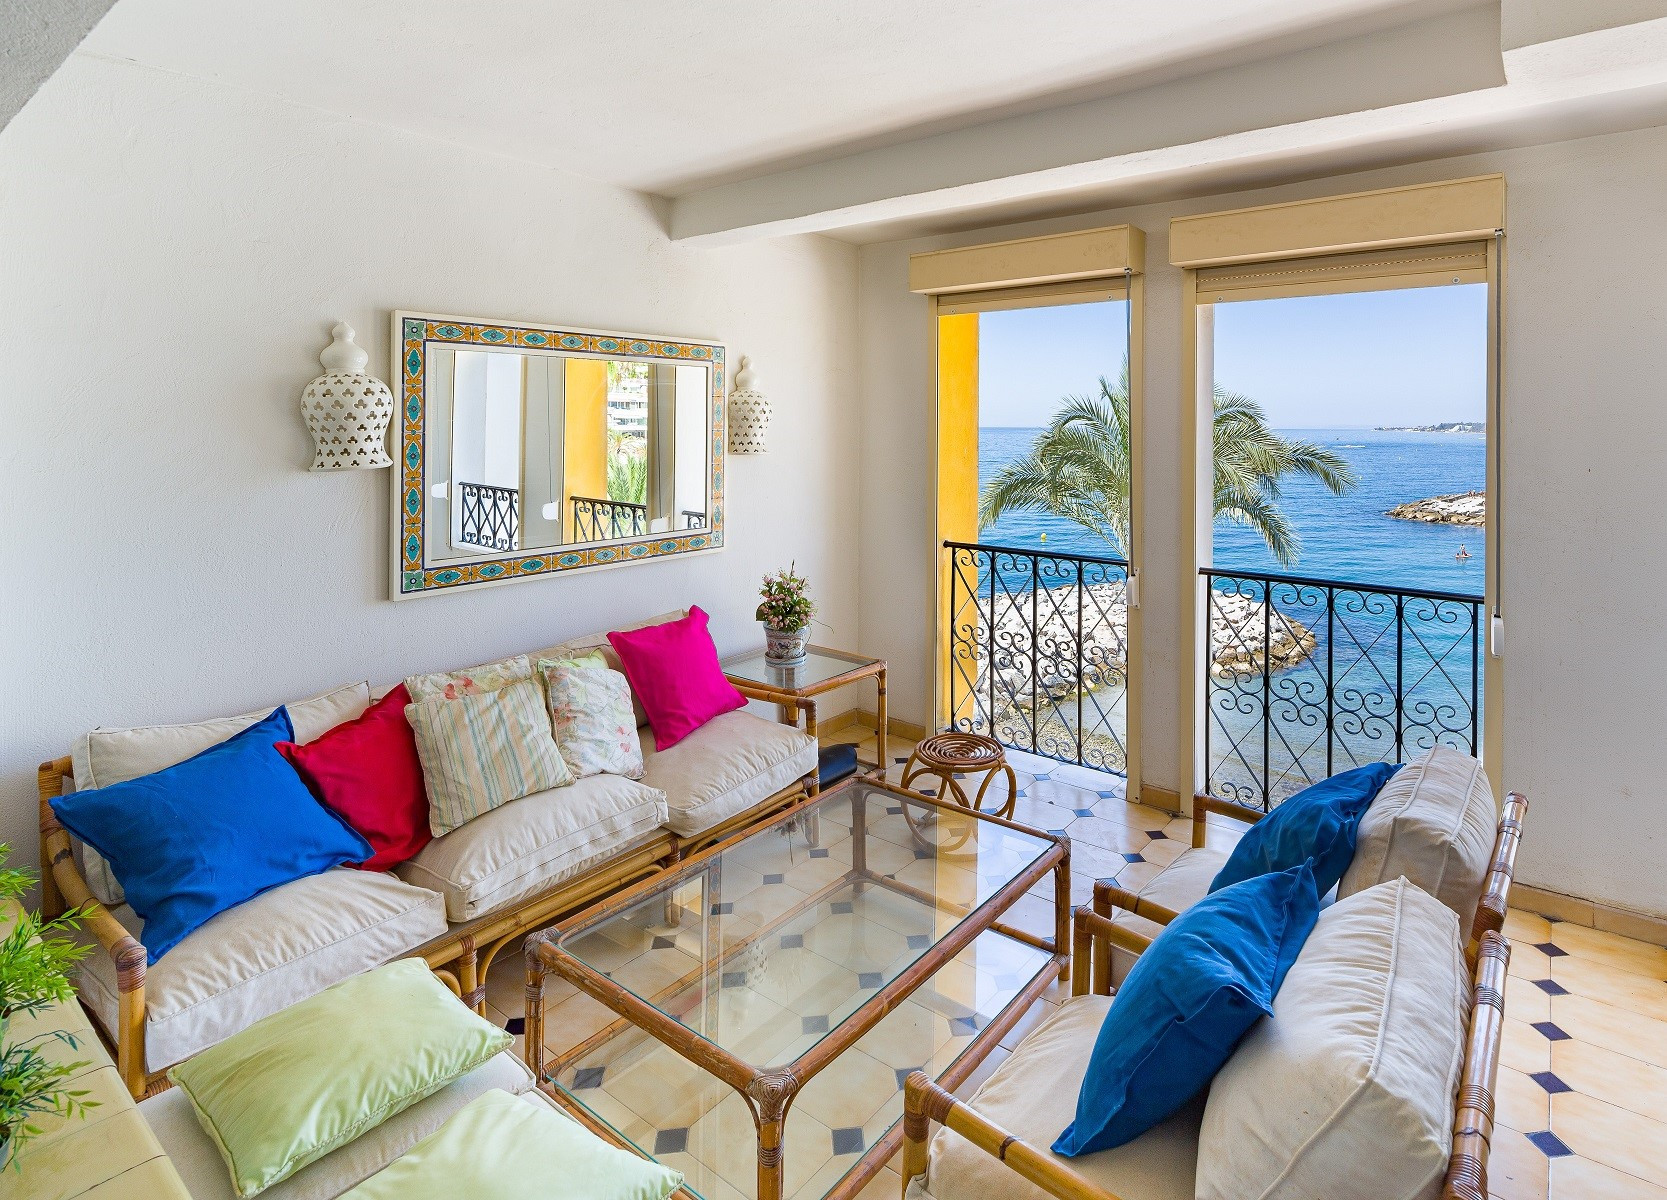 Frontline beach Apartment with panoramic sea views in Puerto, Puerto Banus, Marbella